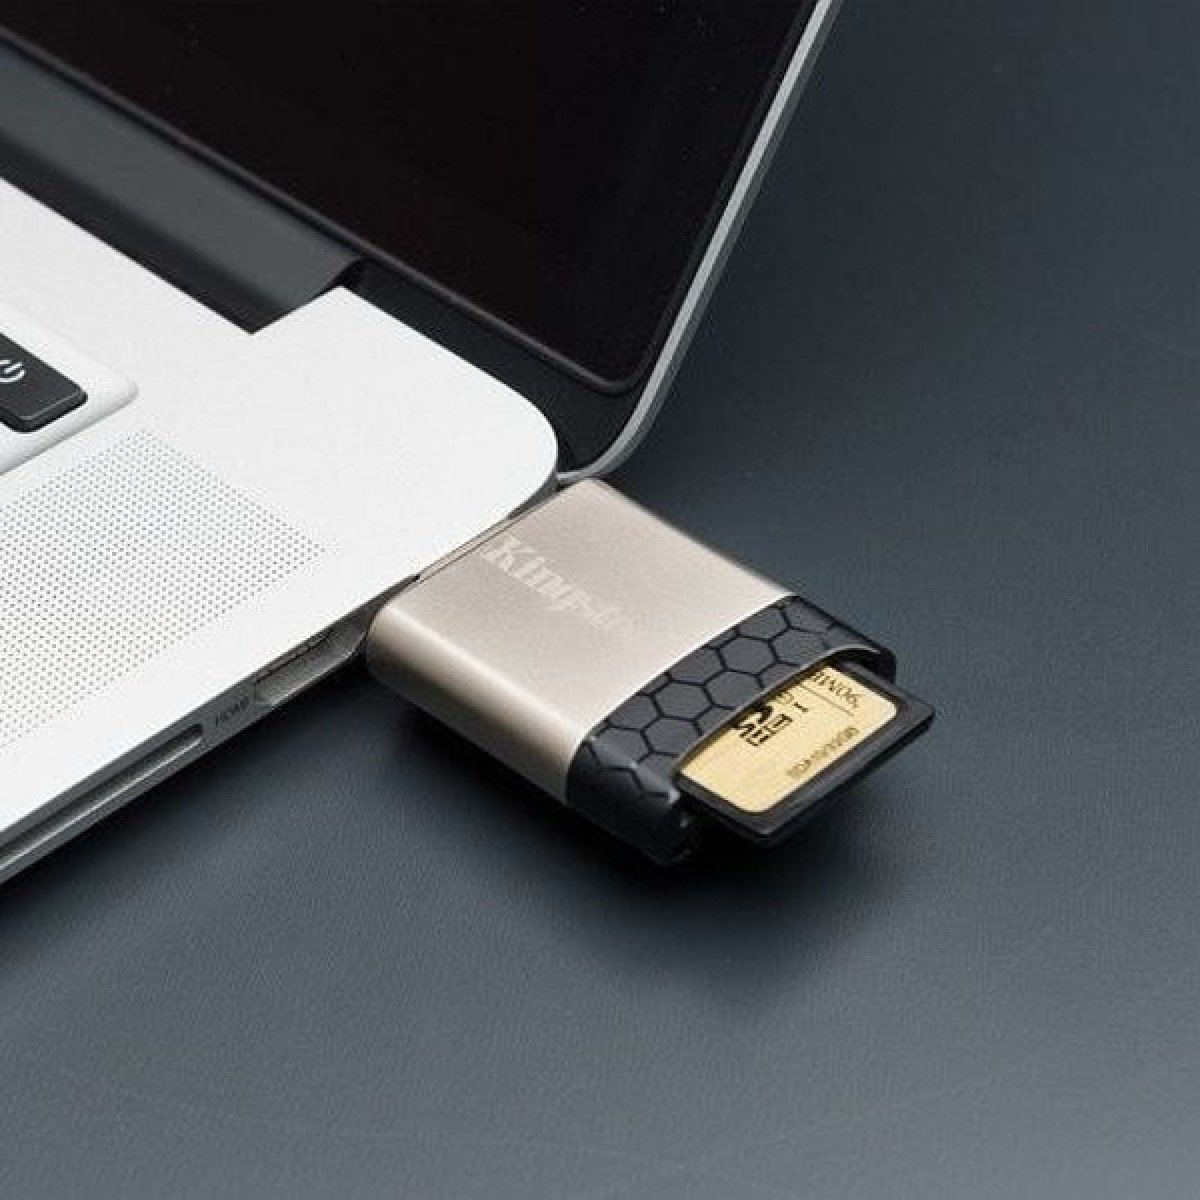 Kingston MobileLite G4 USB 3.0 FCR-MLG4 od 299 Kč - Heureka.cz